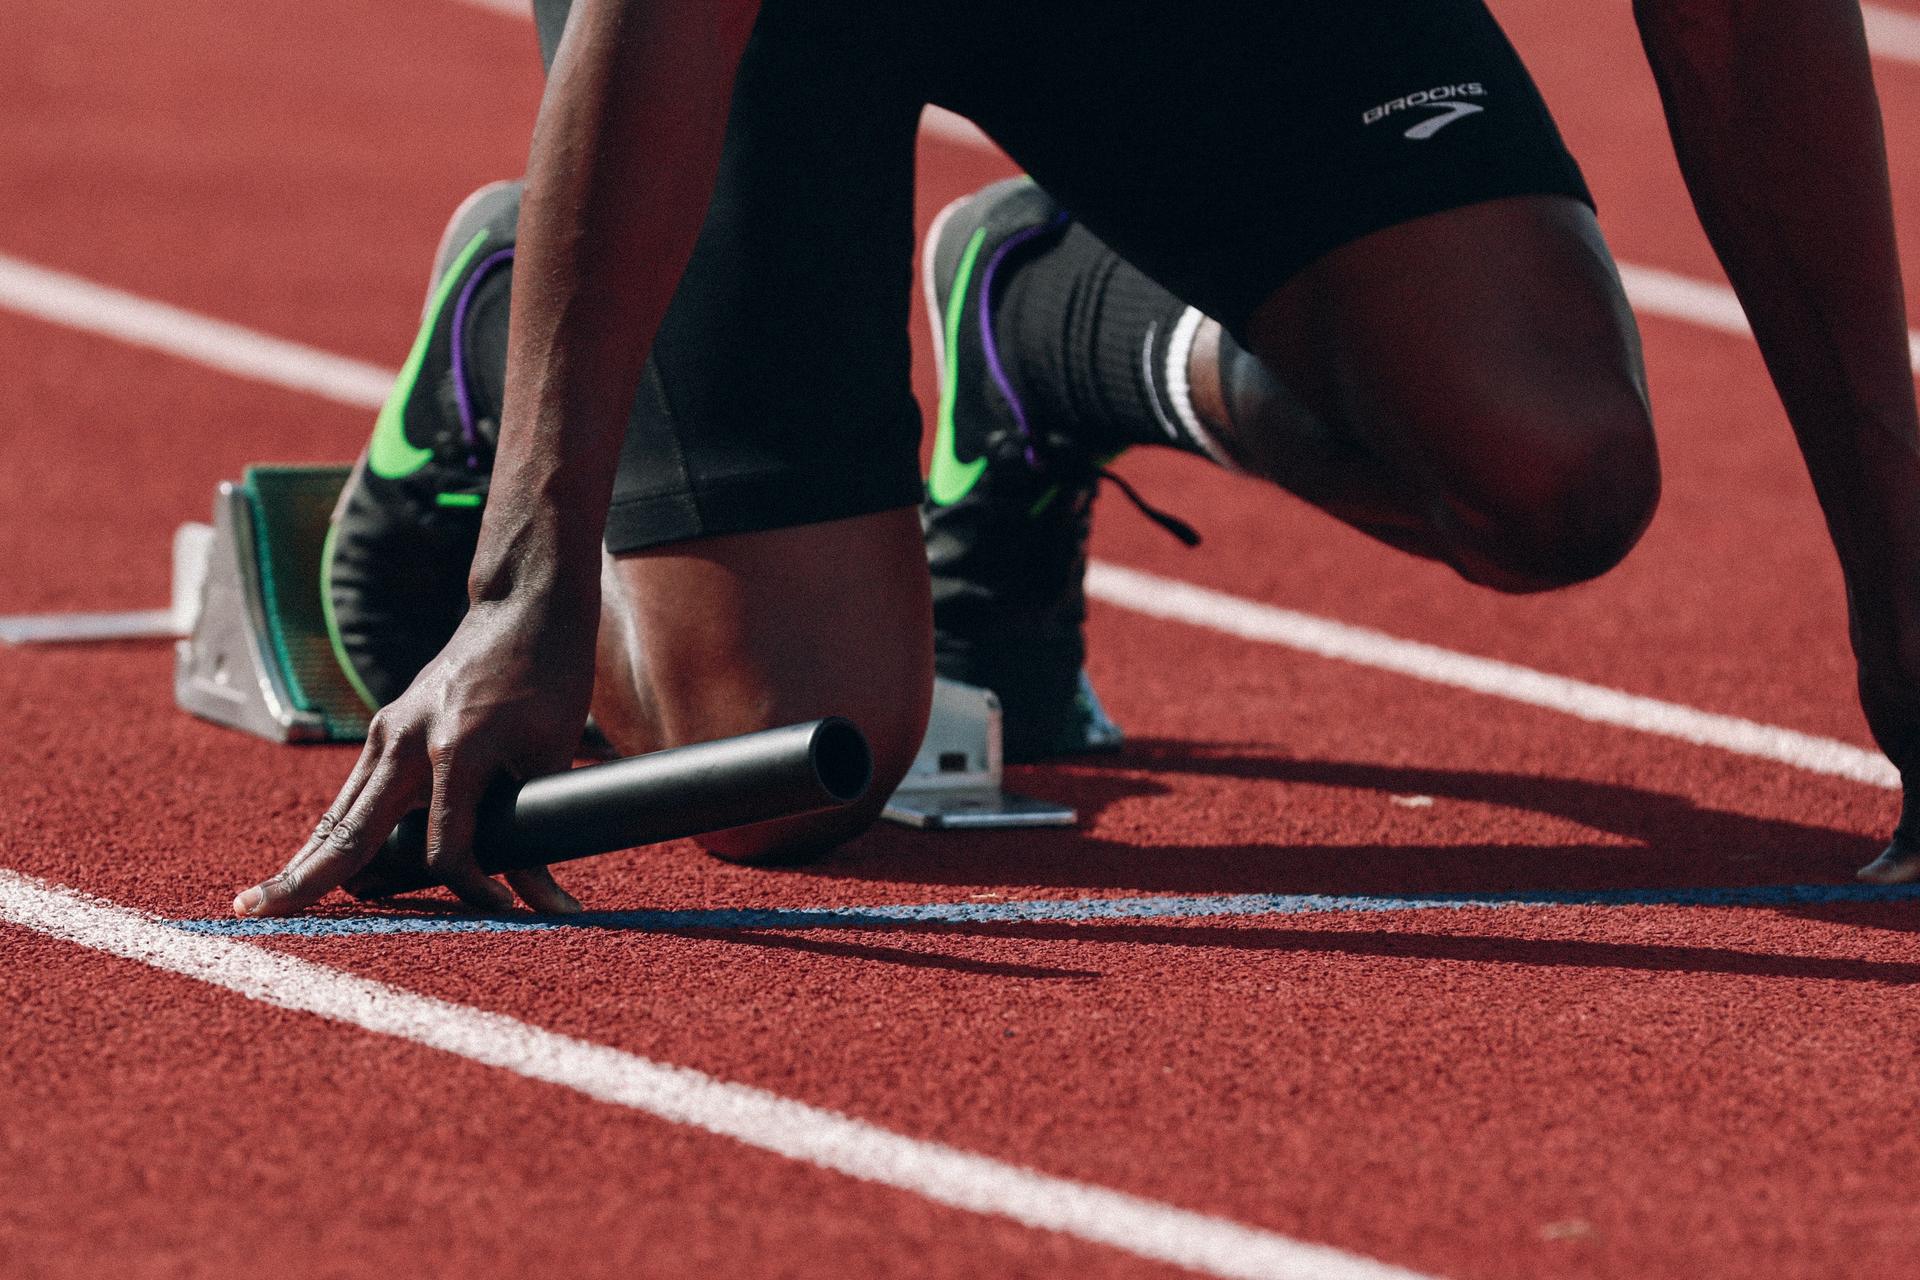 Closeup of track athlete's legs preparing to sprint holding baton.